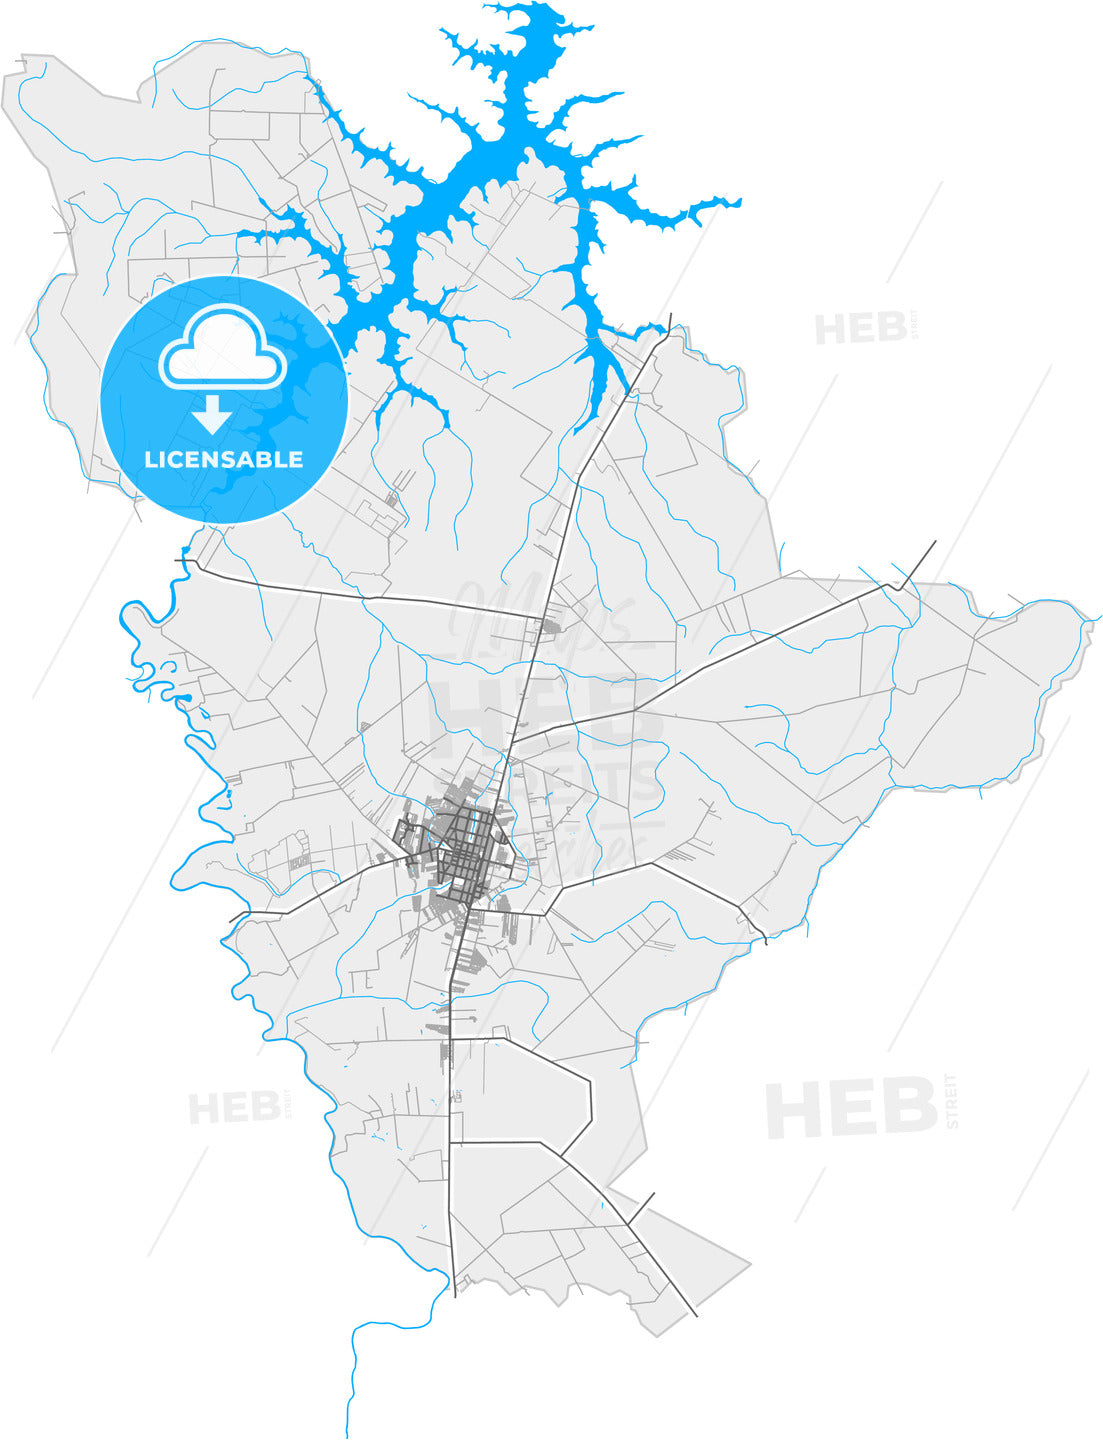 Sinop, Brazil, high quality vector map